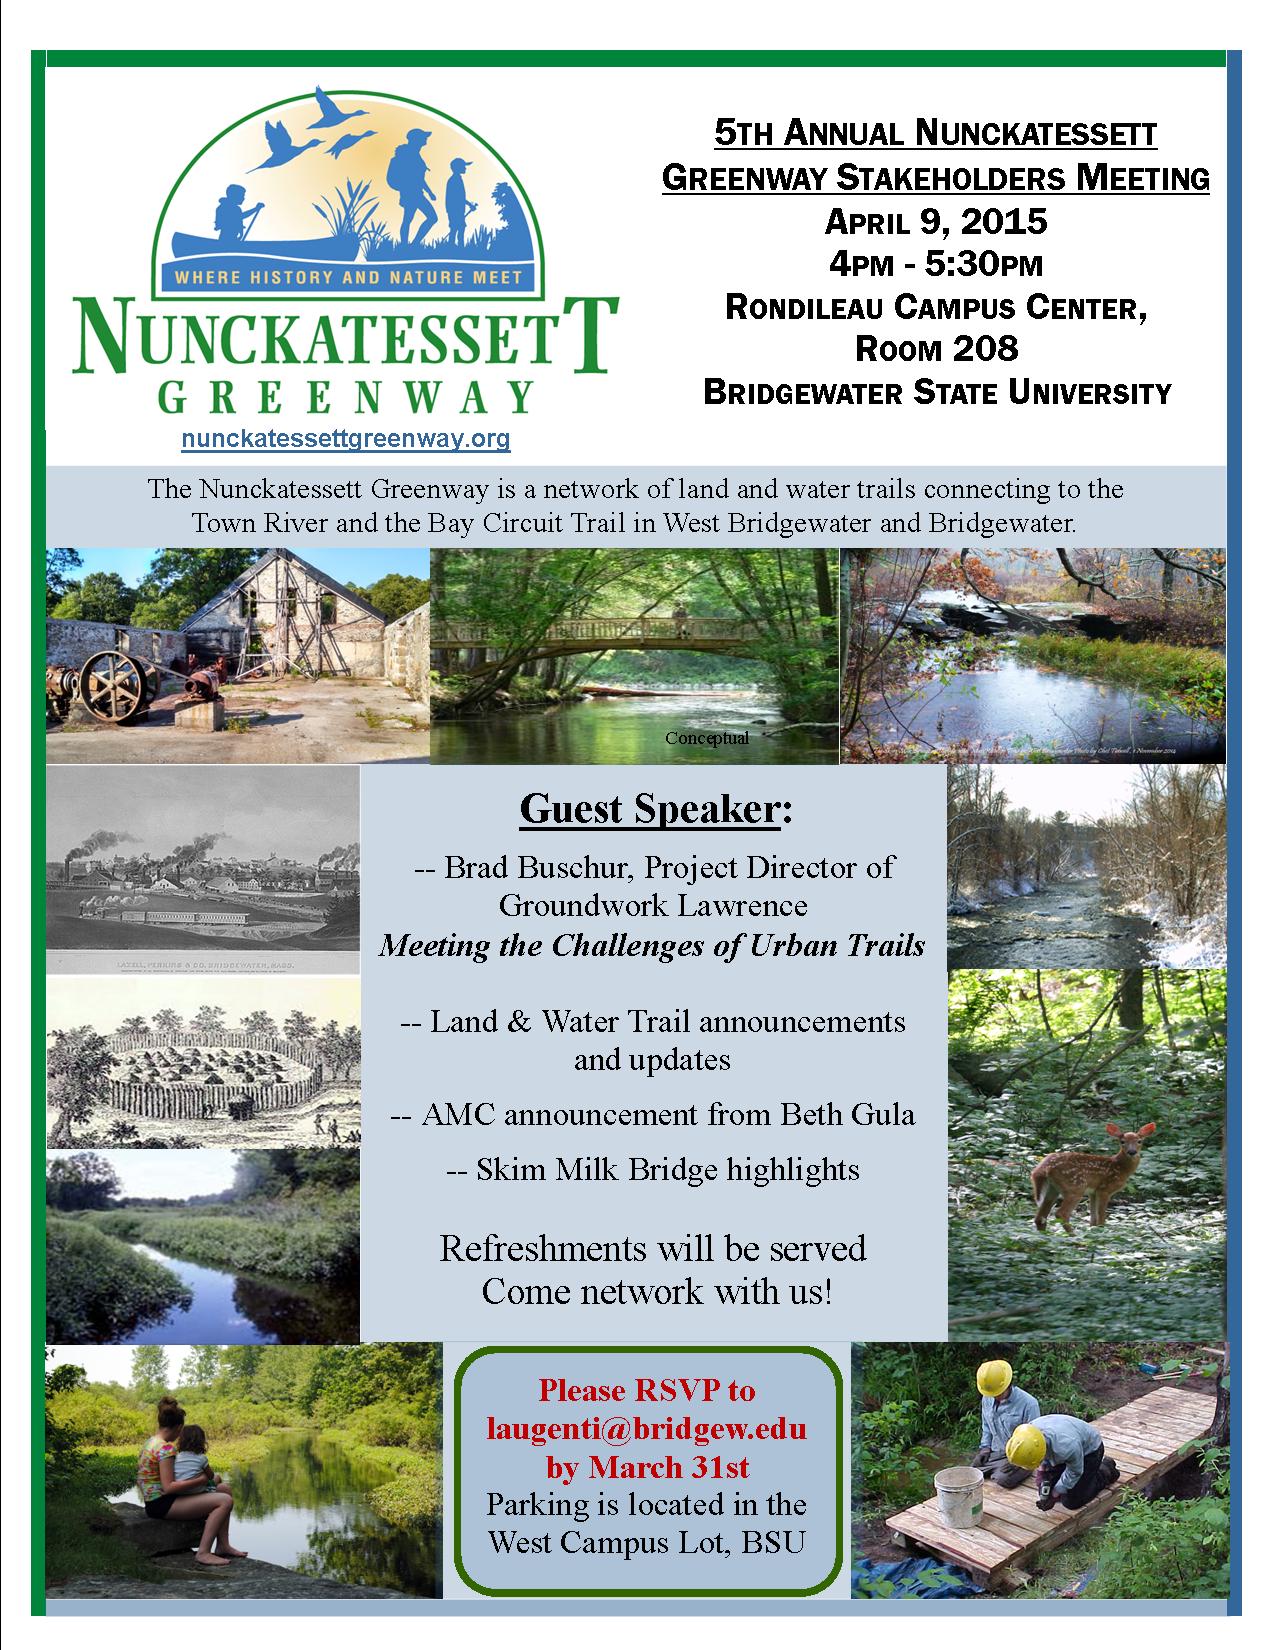 5th Annual Nunckatessett Greenway Stakeholders Meeting 2015